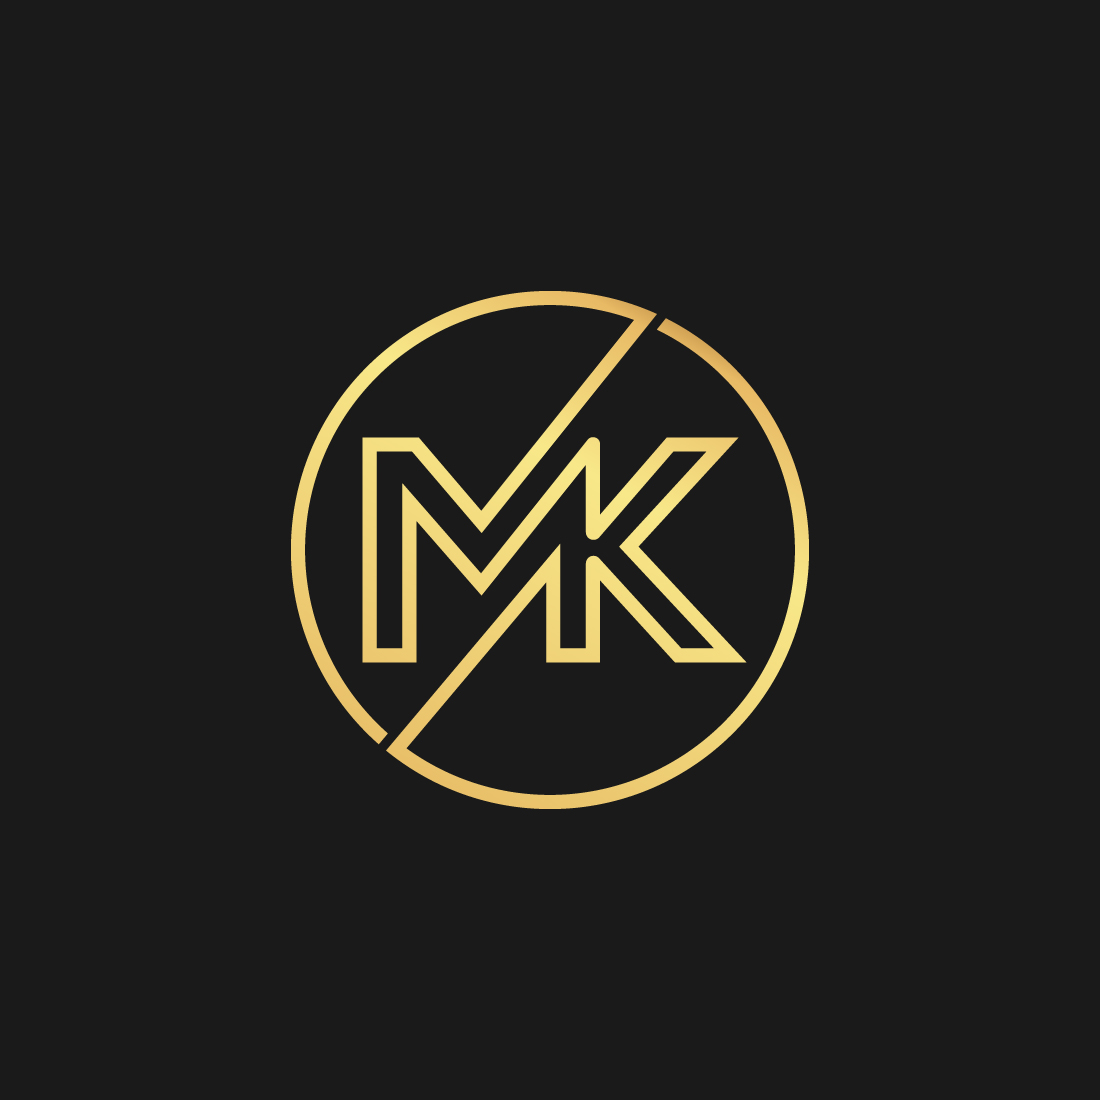 MK logo design preview image.